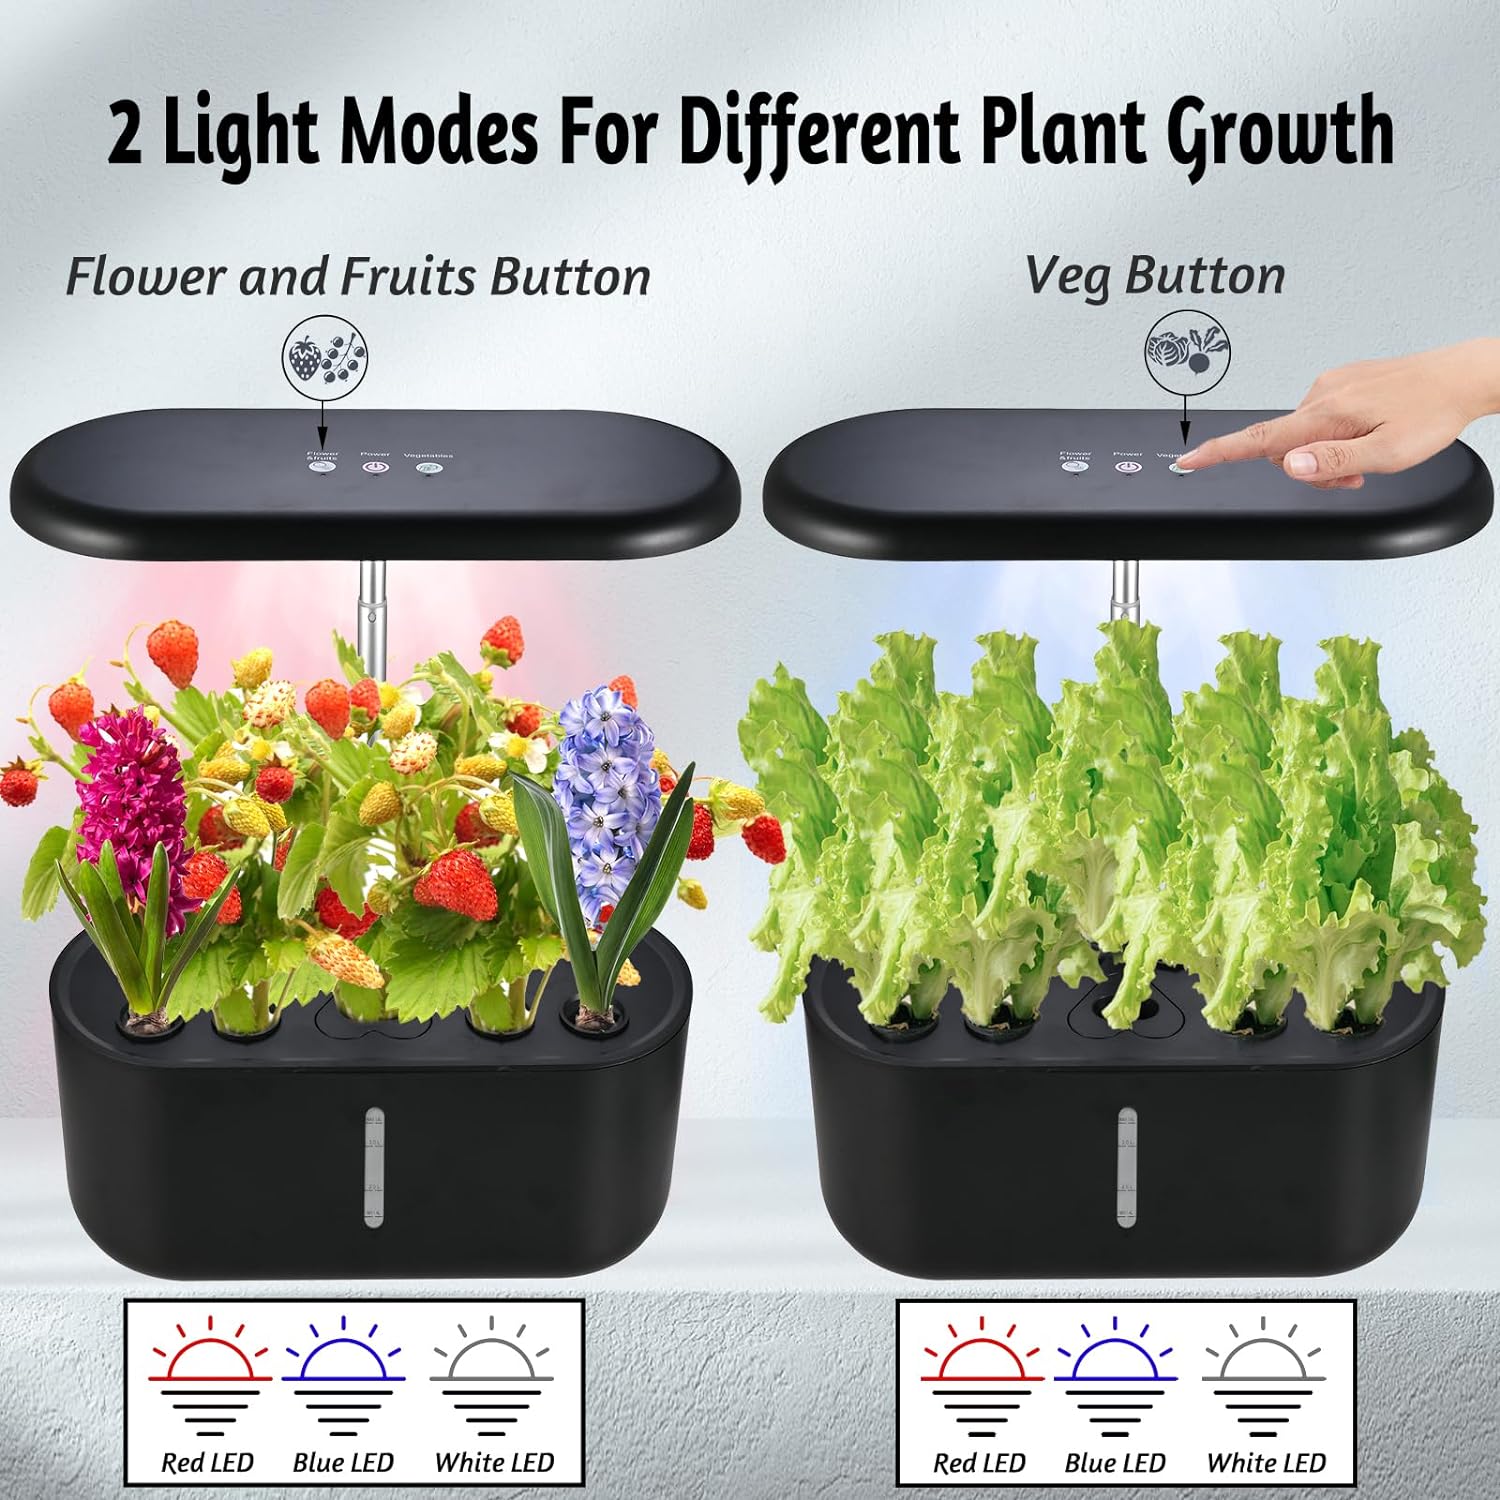 Vegrower H10 Indoor Garden System with 10 Pods